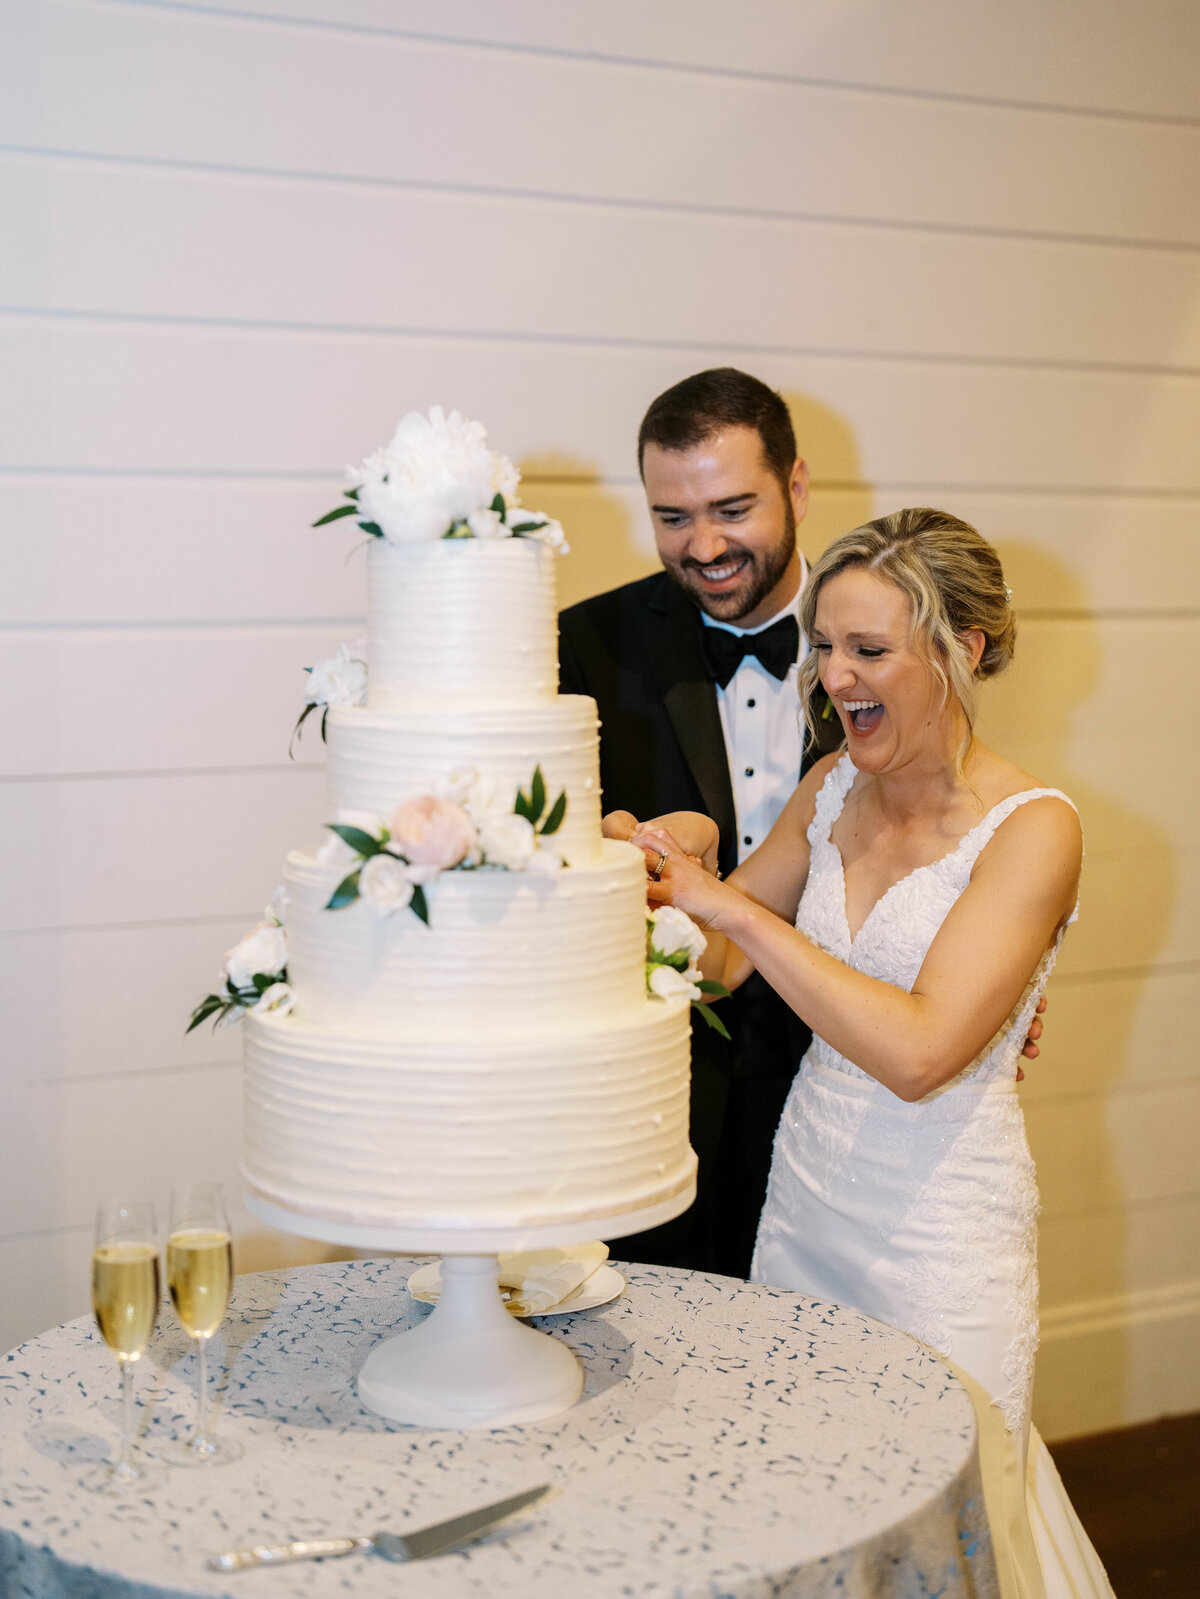 Anyvent wedding cake cutting